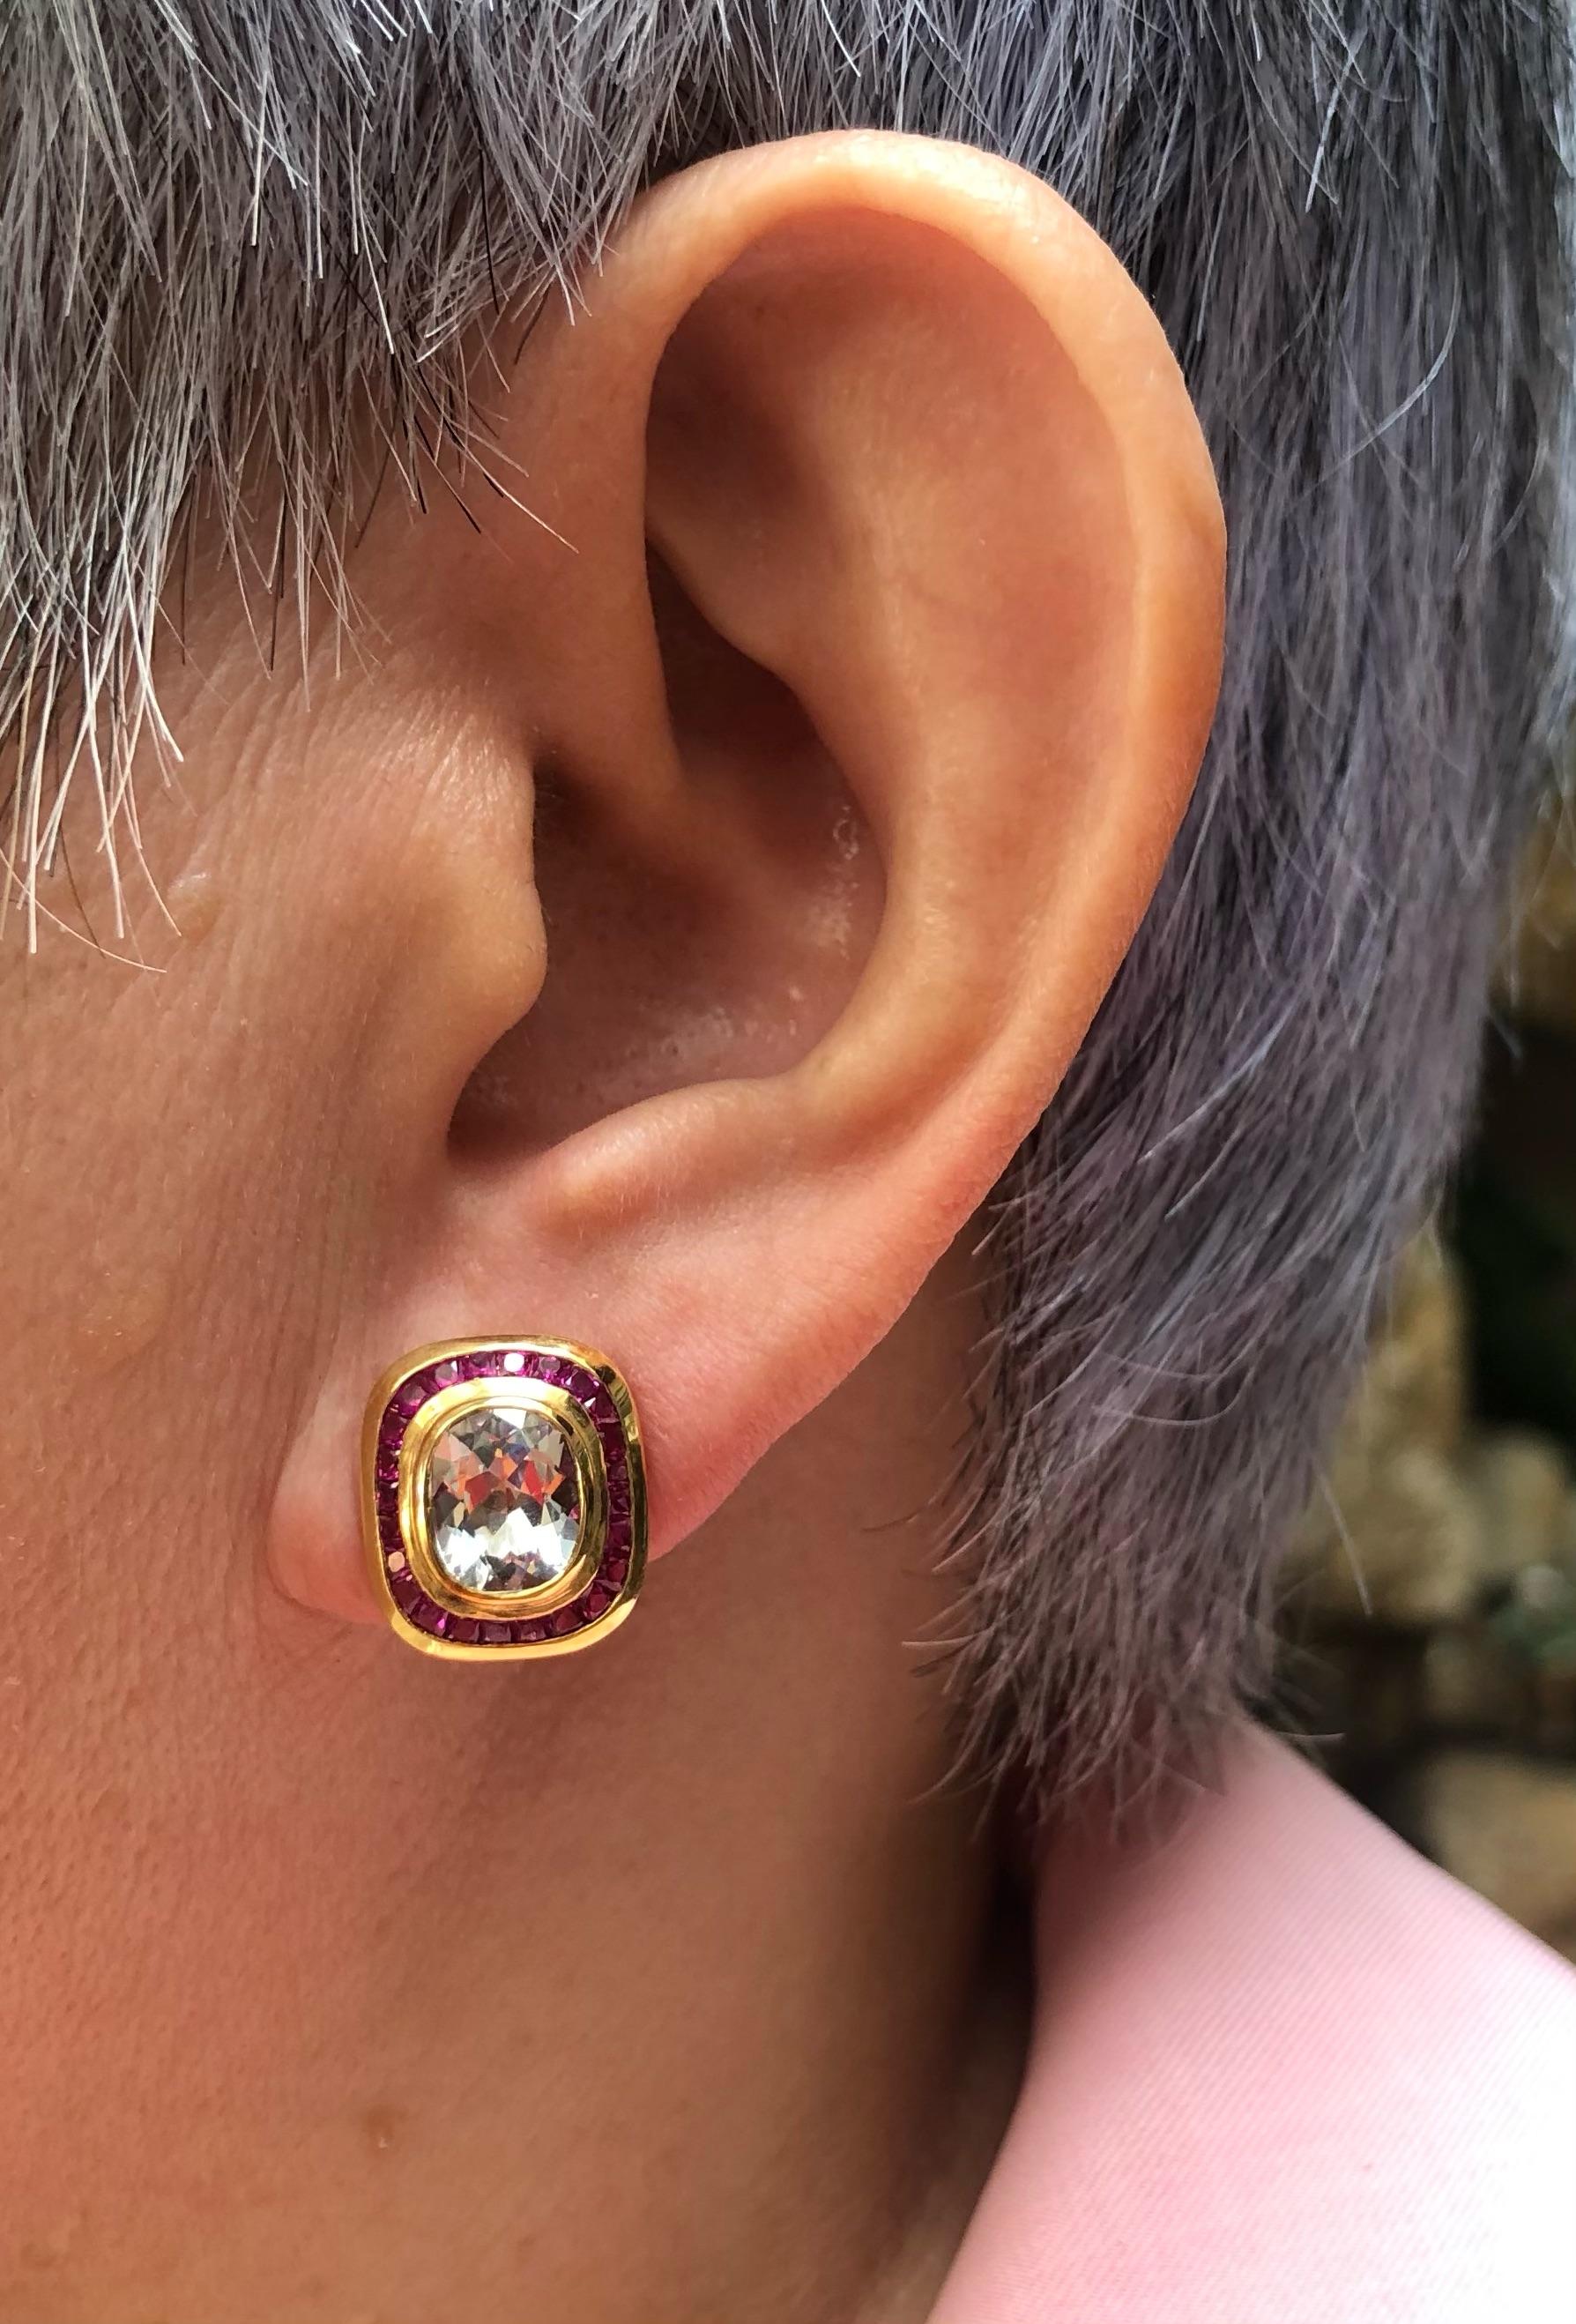 Crystal Quartz 3.15 carats with Ruby 2.63 carats Earrings set in 18 Karat Gold Settings

Width: 1.3 cm
Length: 1.2 cm 

